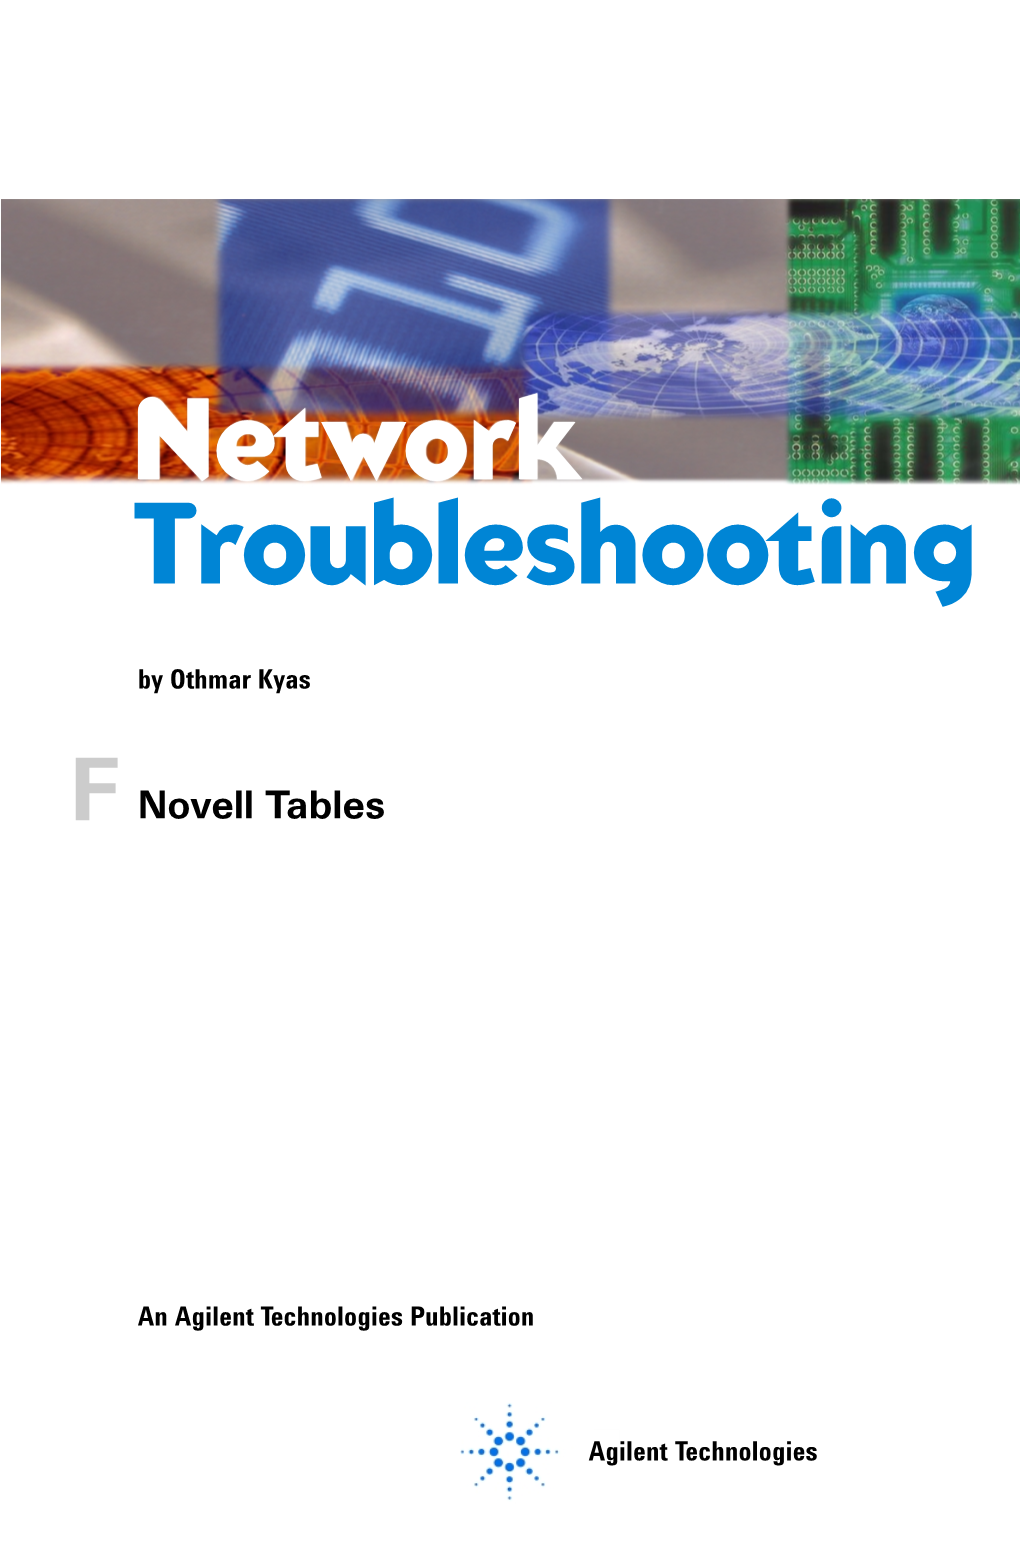 Novell Tables